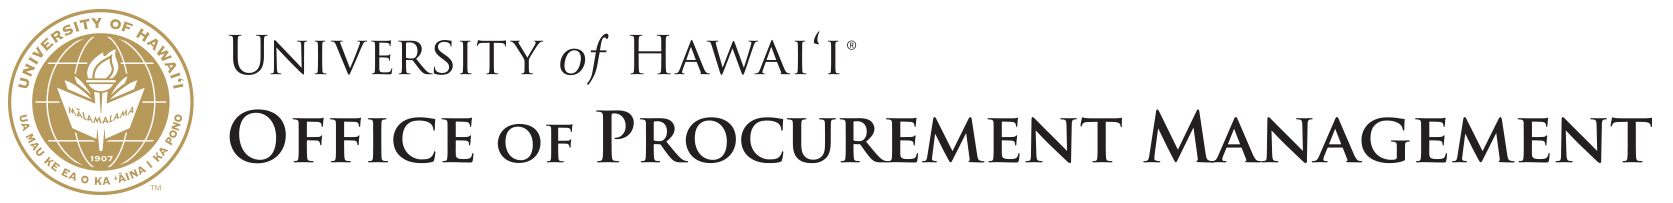 University of Hawaiʻi Office of Procurement Management